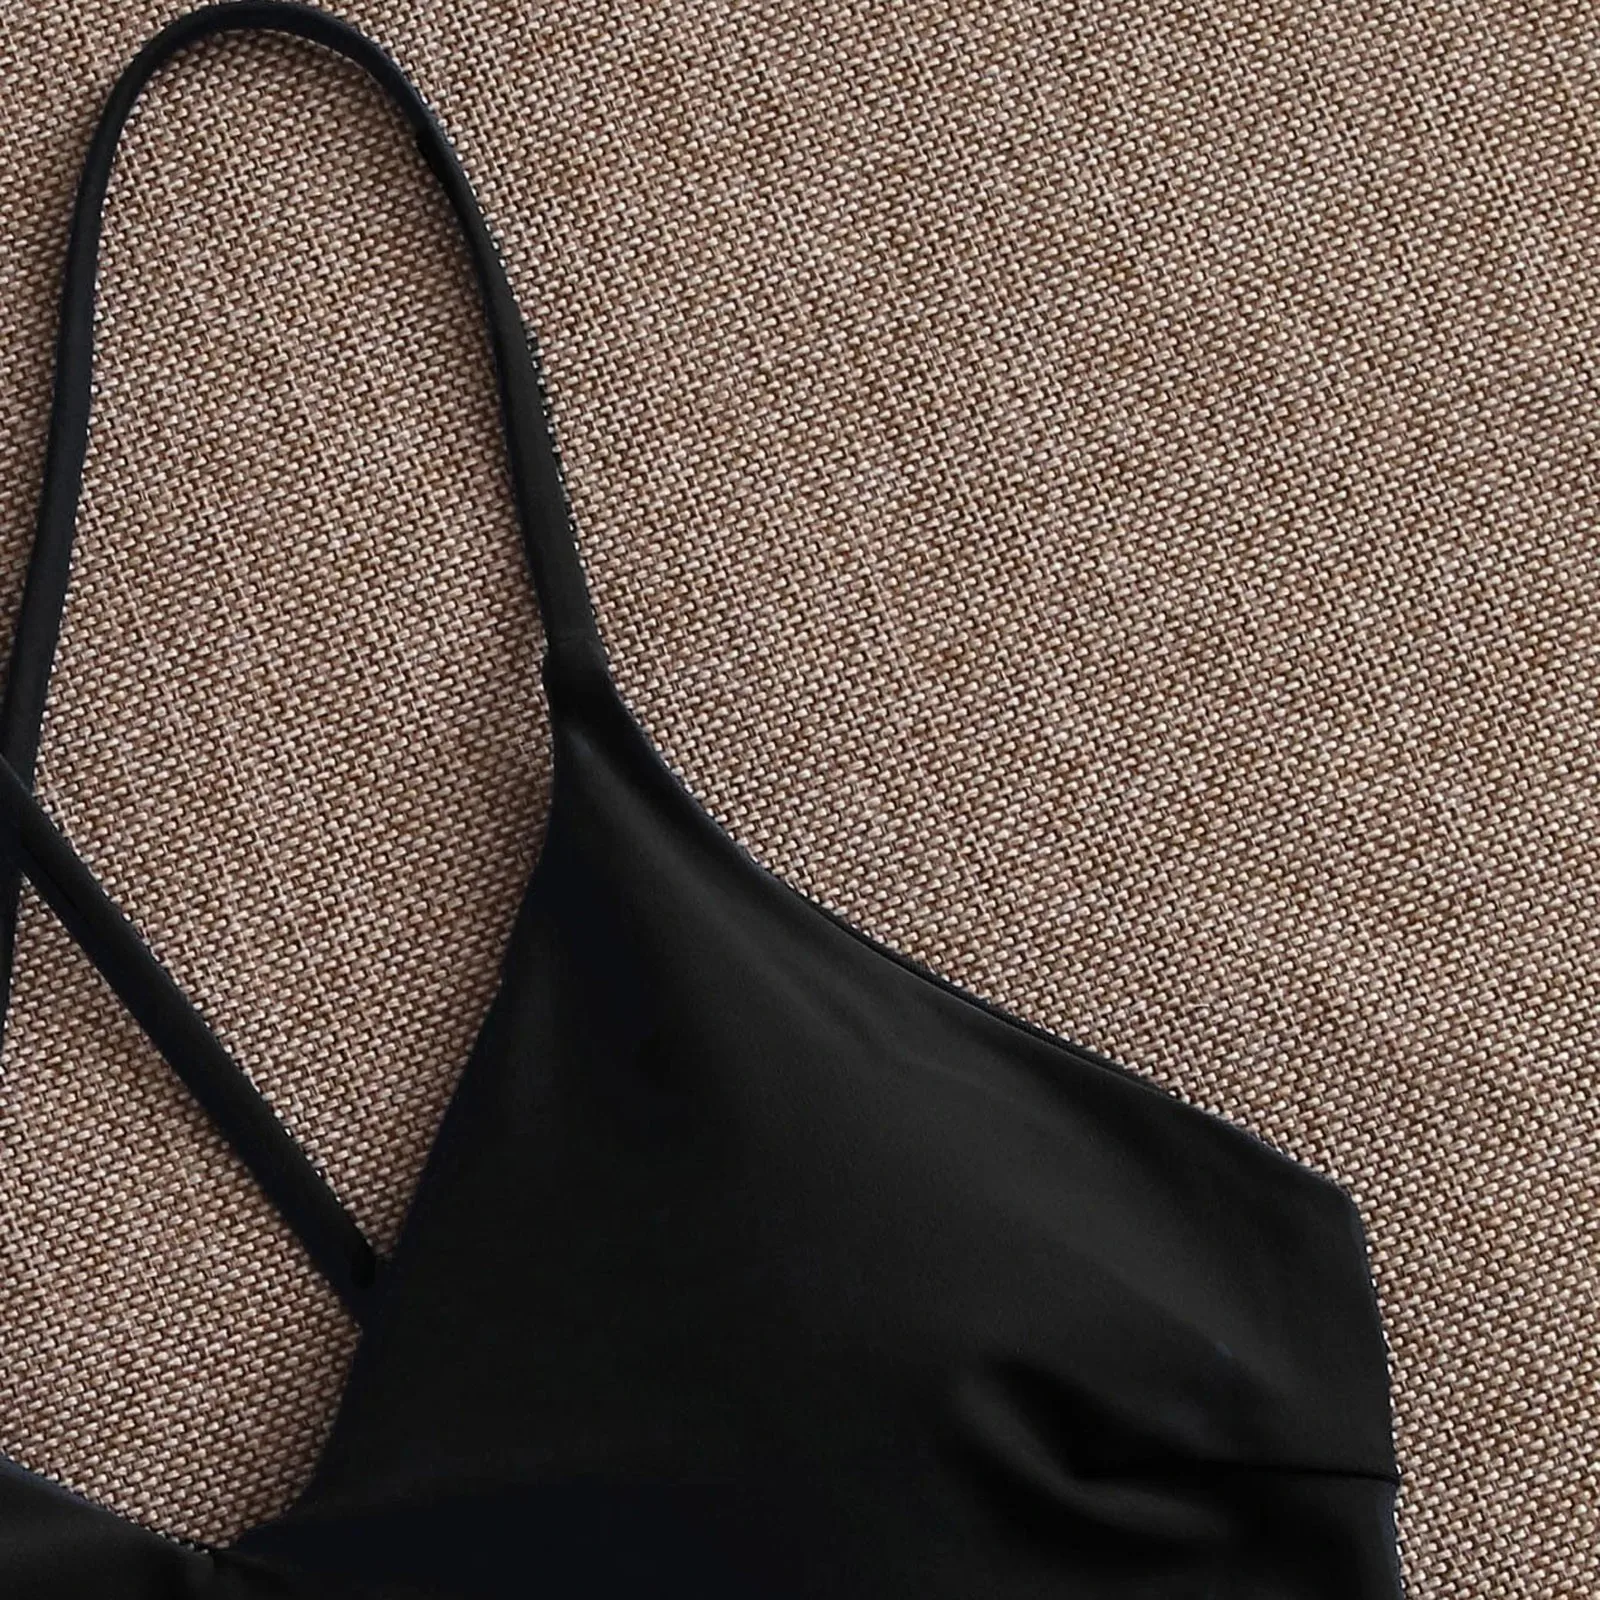 

Biquinis 2021 Women's Bathing Suits Leaf Random Print Bikini Set Push-Up Swimsuit Beachwear Padded Swimwear